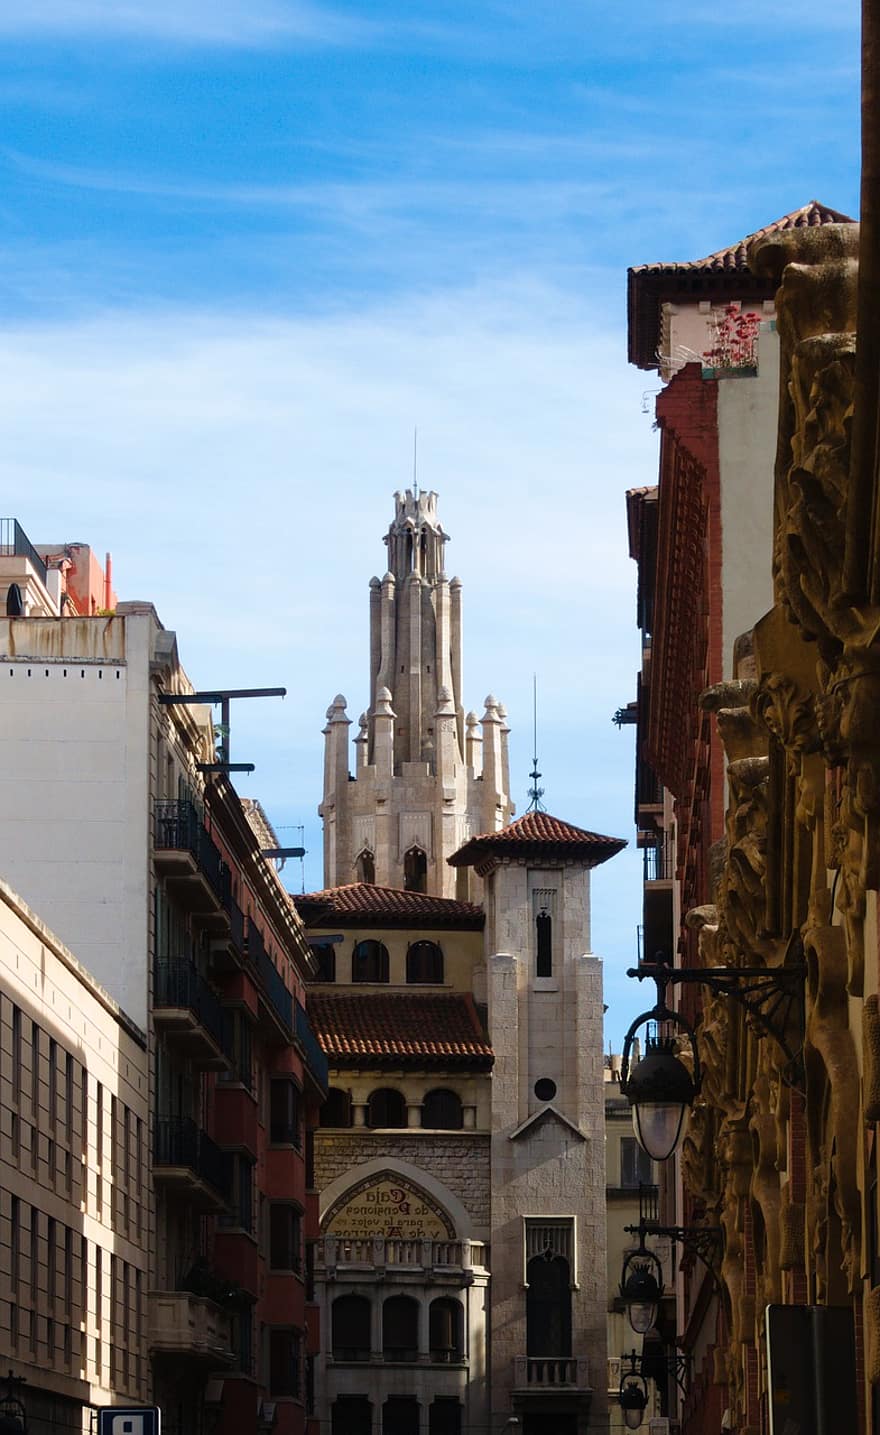 Barcelona, Barri Gotic, Building, City, Architecture, Bank, Tower, Historic, Landmark, famous place, building exterior